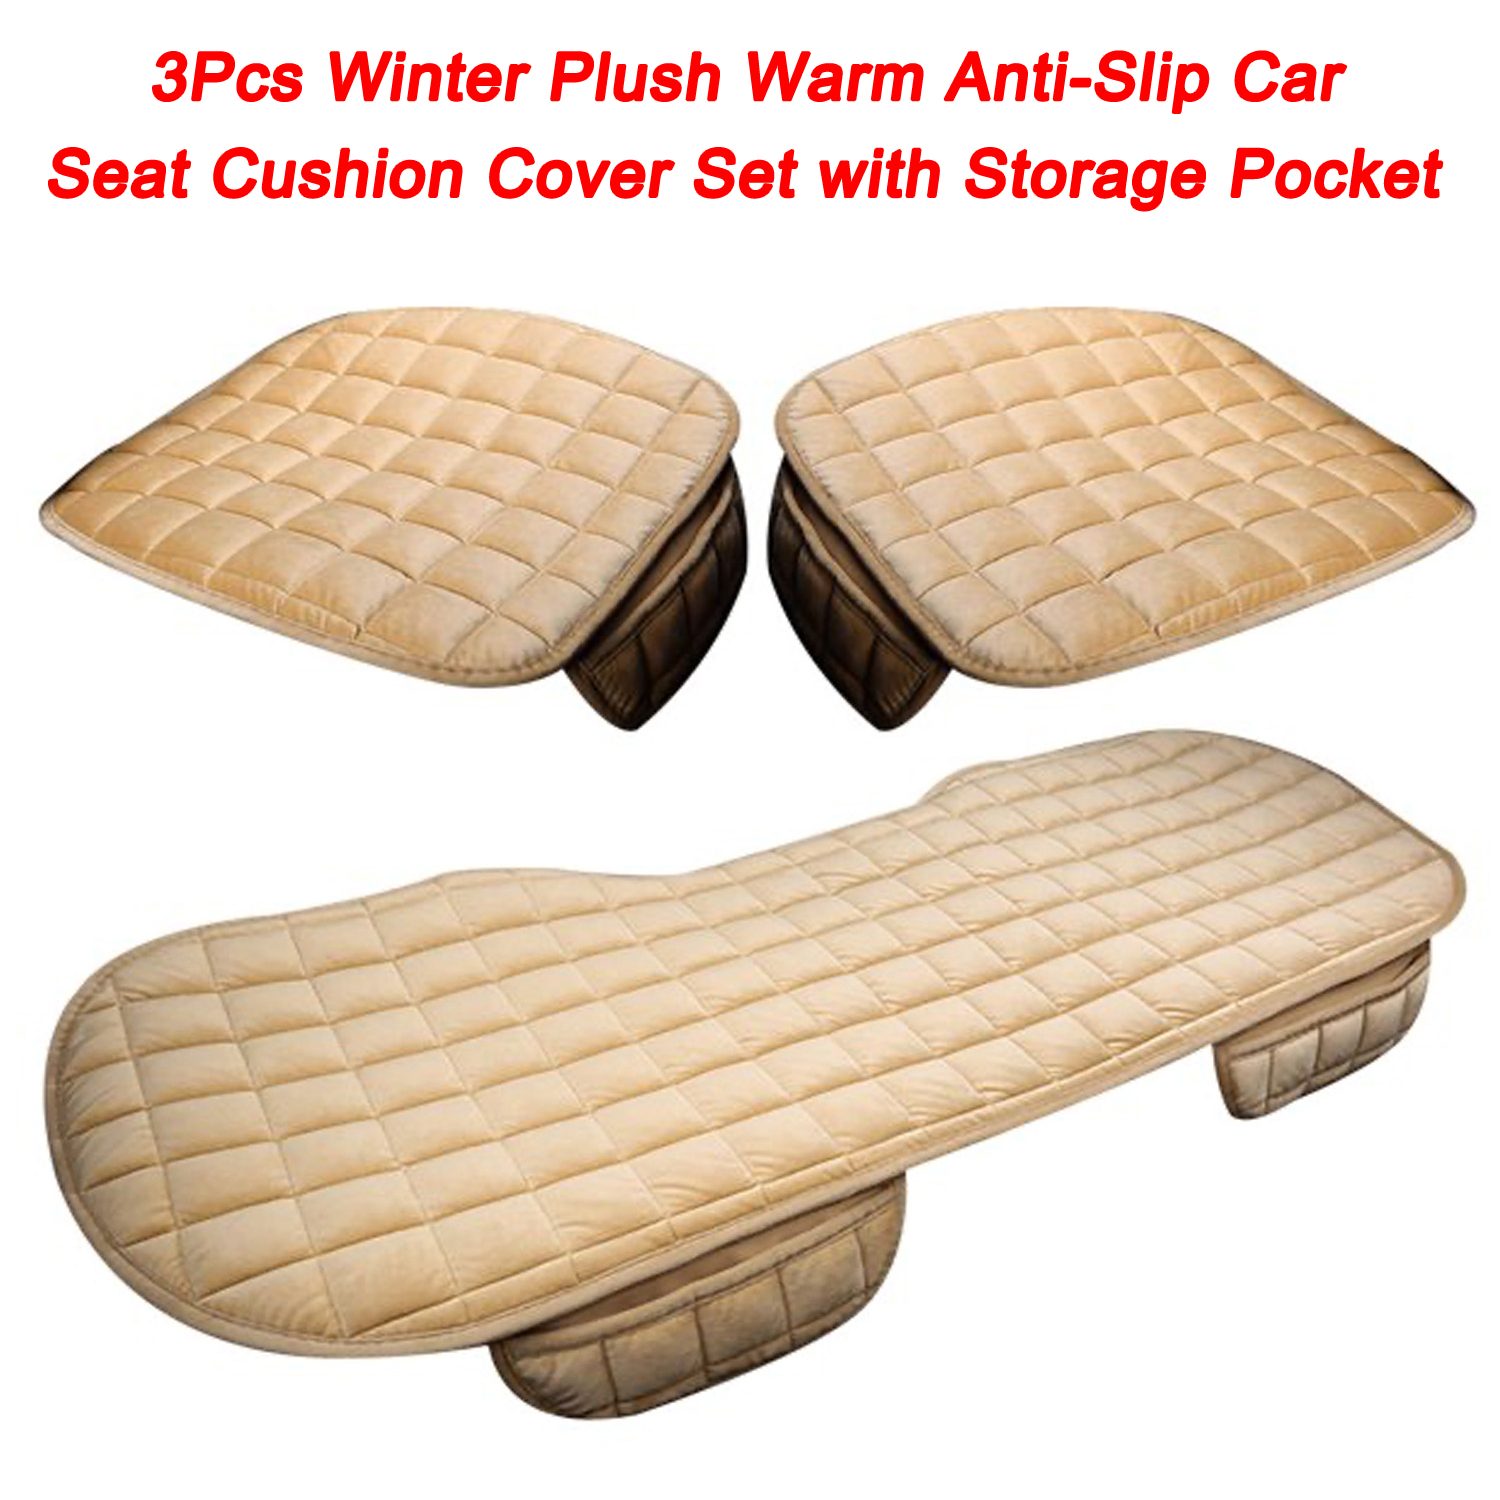 Wholesale 3Pcs Car Seat Cover Winter Plush Warm Anti-Slip Car Seat Cushion Cover Set with Storage Pocket